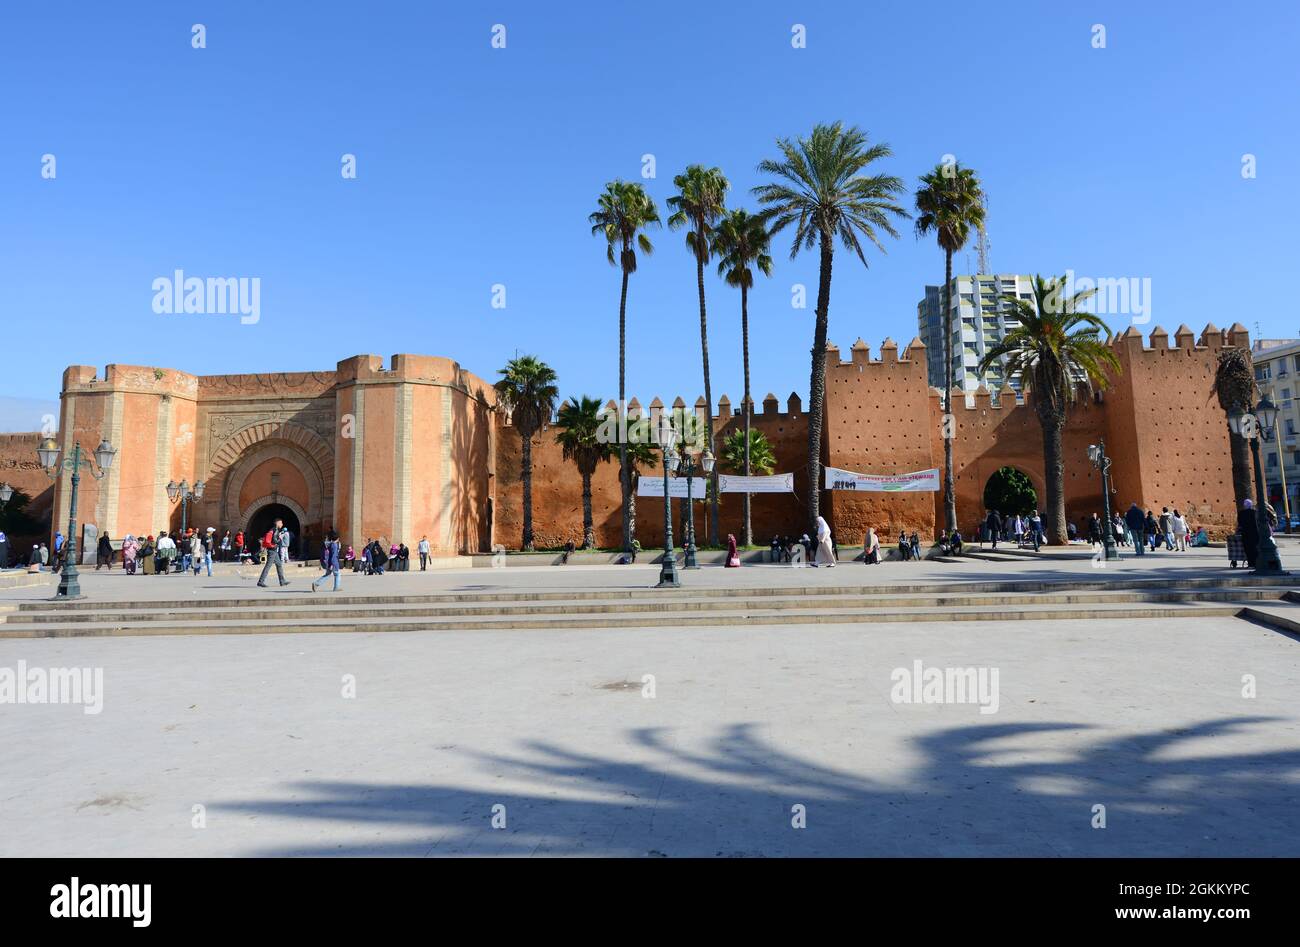 Bab el Had Square and the old city walls of Rabat, Morocco. Stock Photo